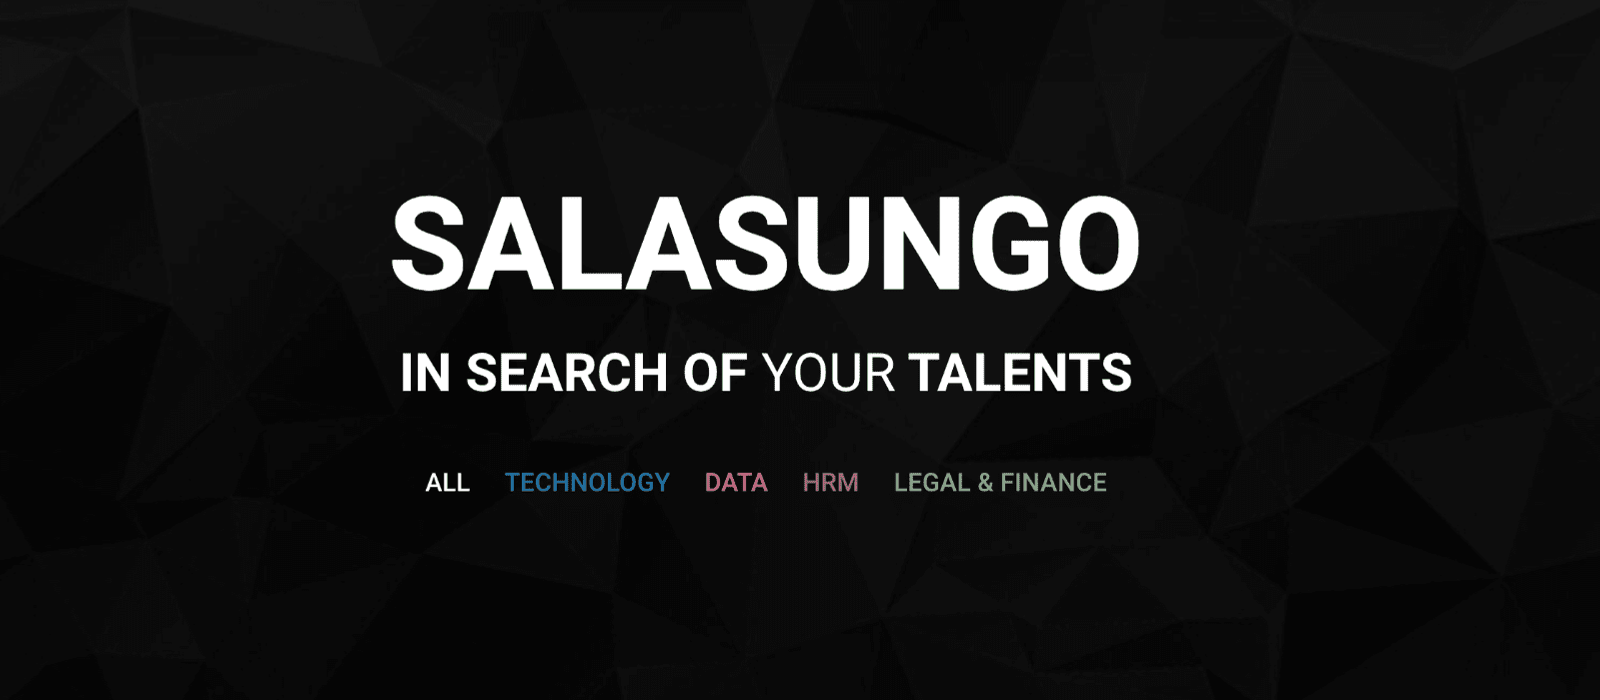 Salasungo Recruitment Website by Volcanic